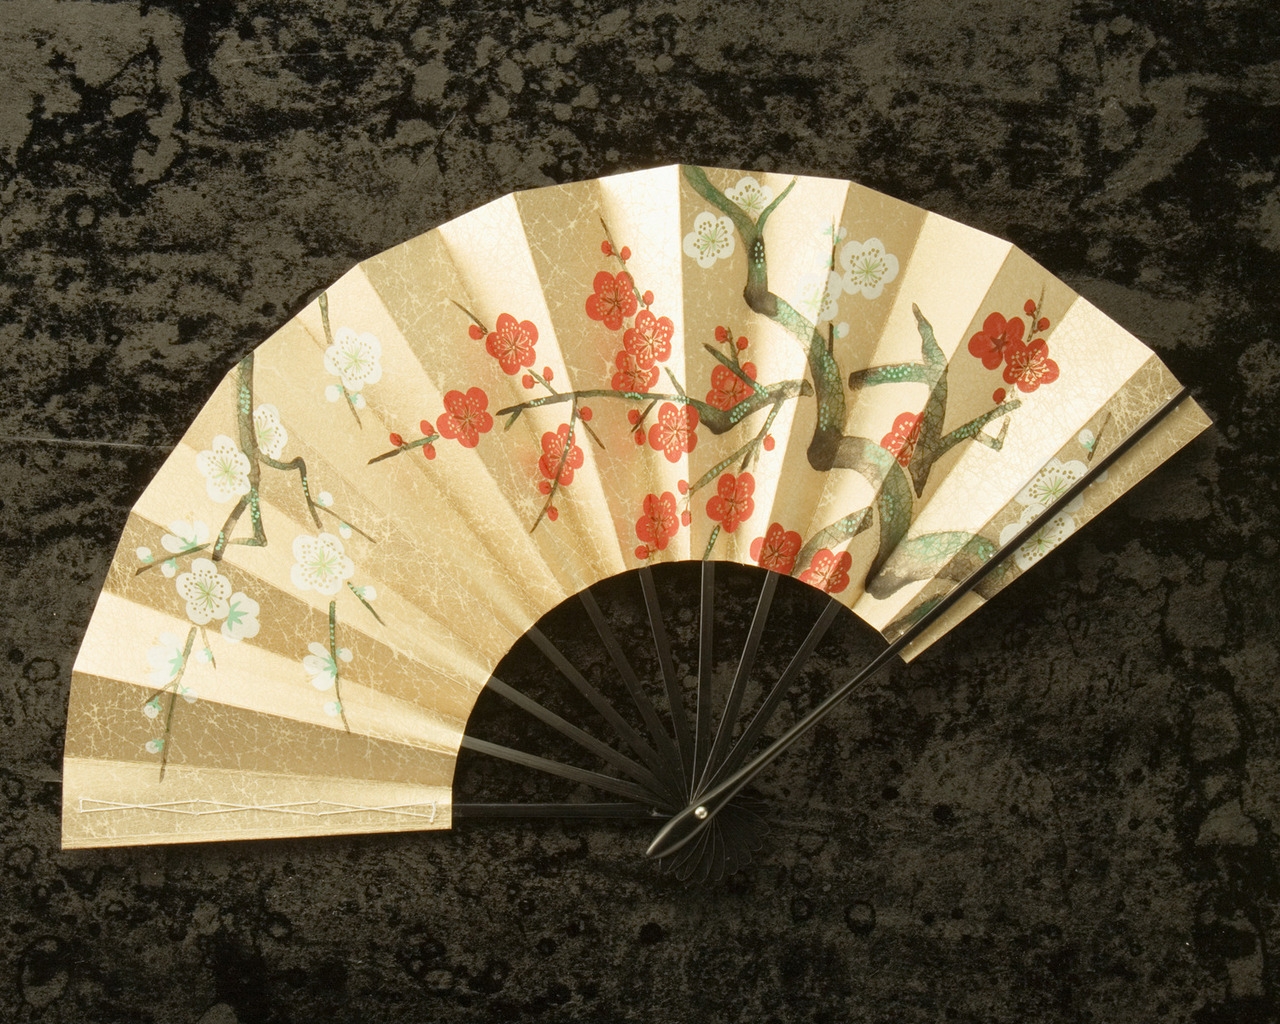 Vintage Fan for 1280 x 1024 resolution